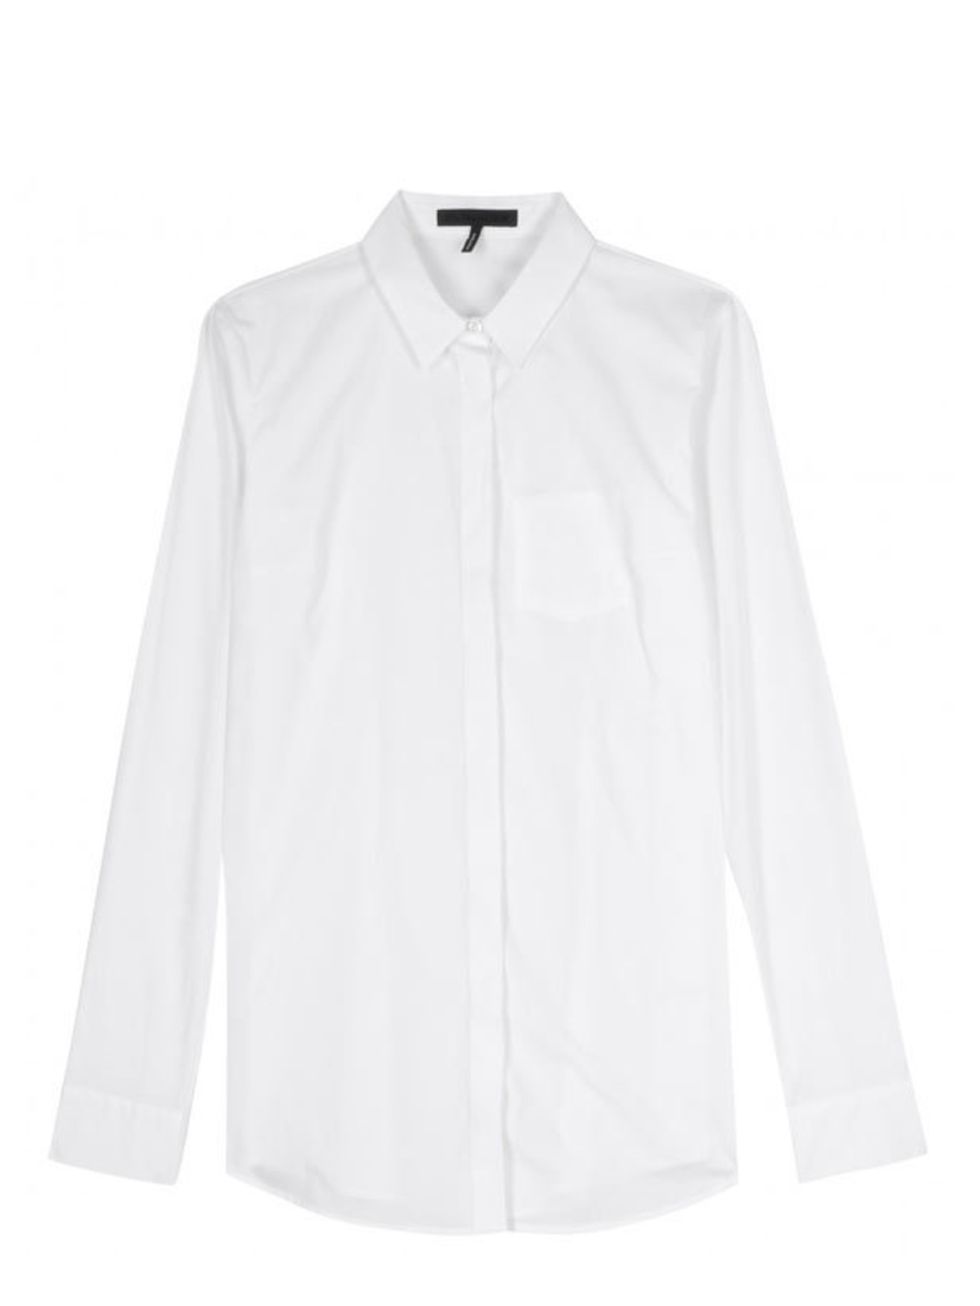 <p>Jil Sander Navy classic shirt, £250, at mytheresa</p>